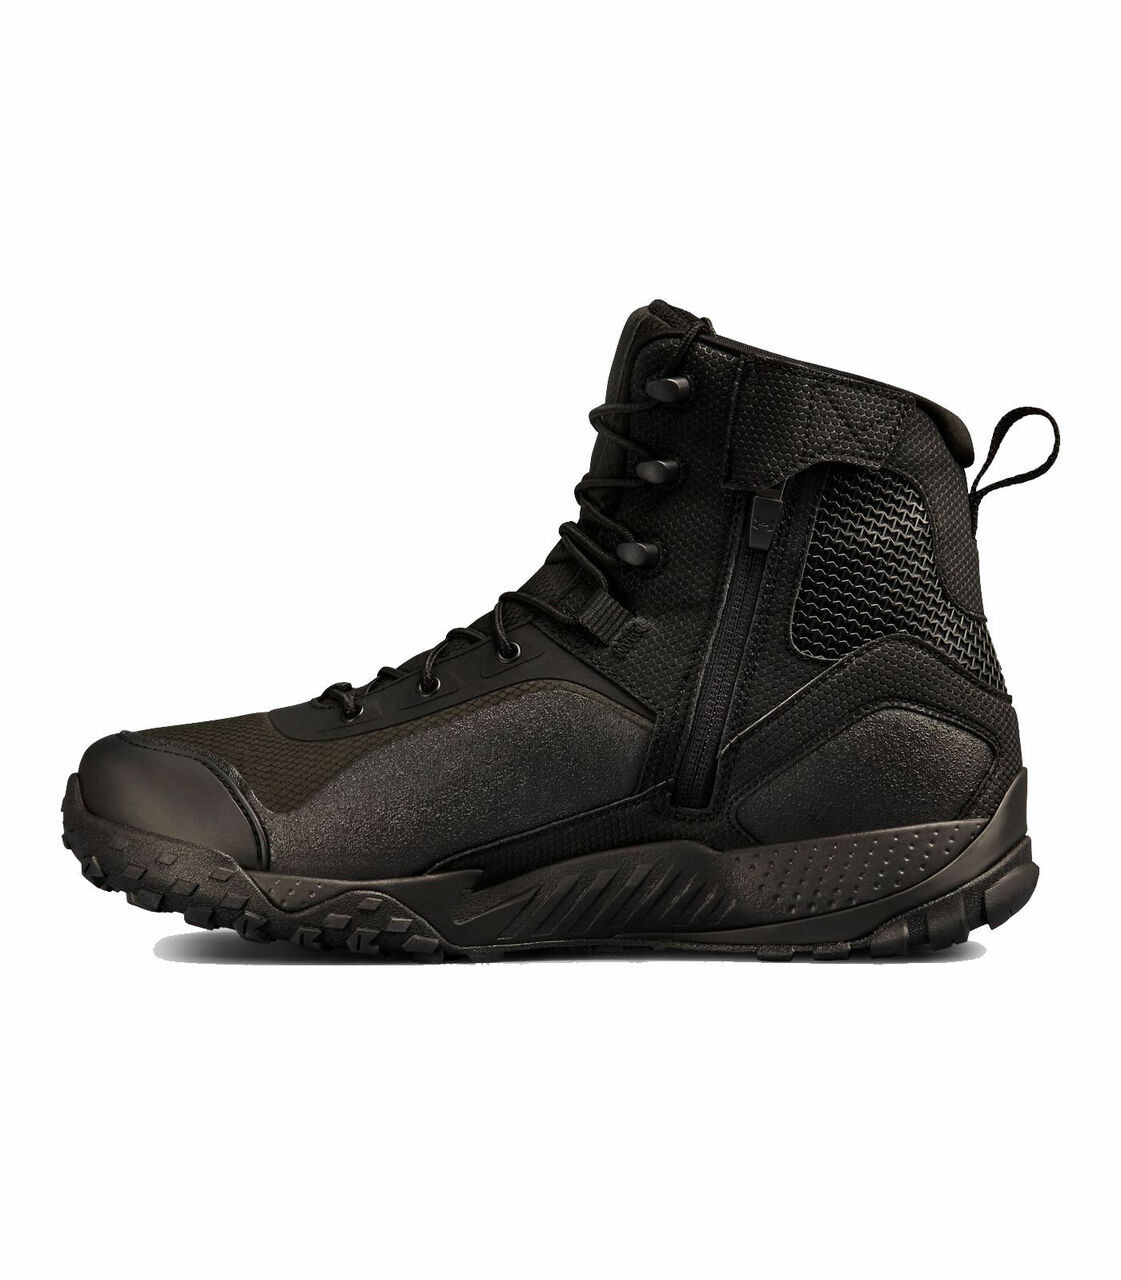 Under Armour Valsetz RTS 1.5 Tactical Boots for Women, Size 8 - Black